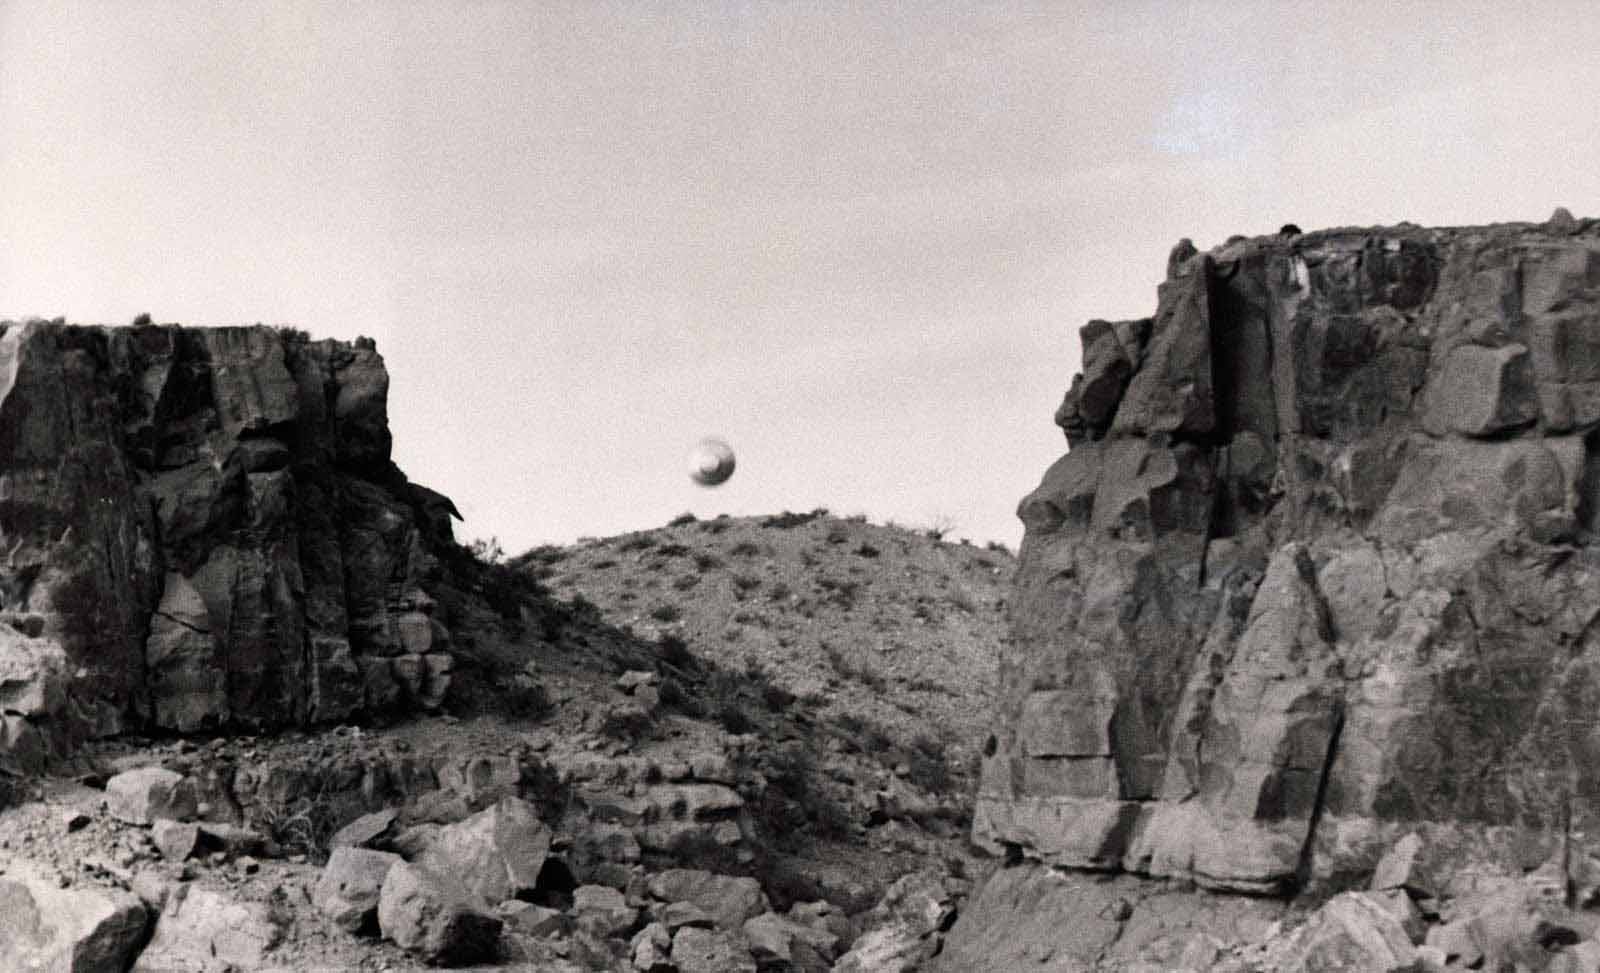 Las Cruces, New Mexico UFO Photo, 1967